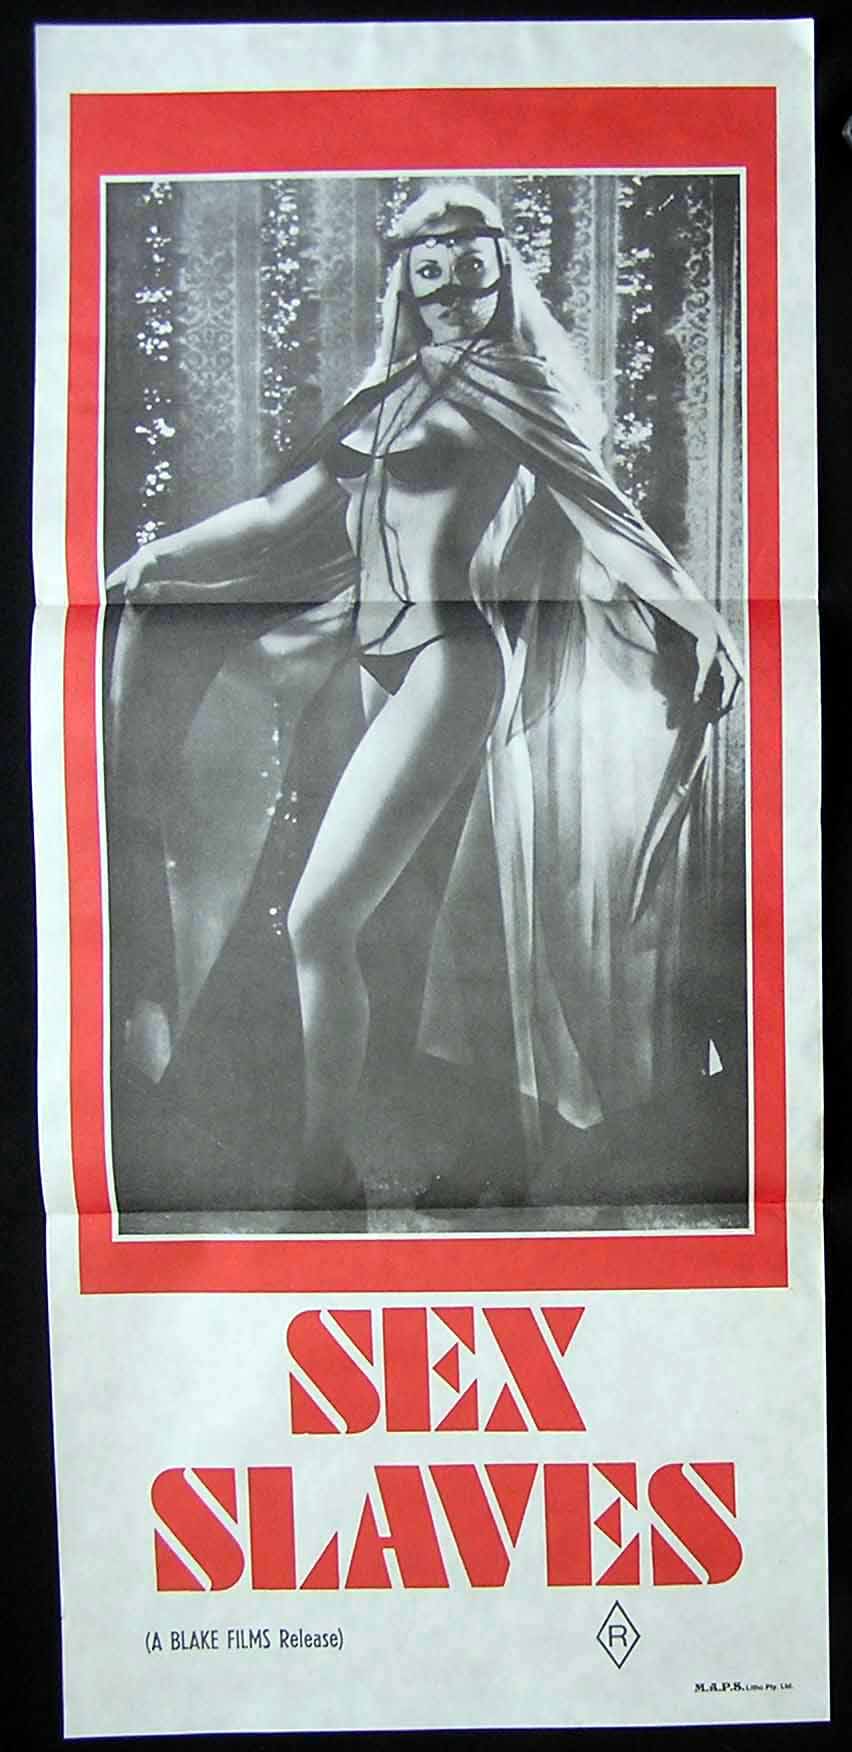 SEX SLAVES ’78-Olivia Pascal Sexploitation Movie Poster